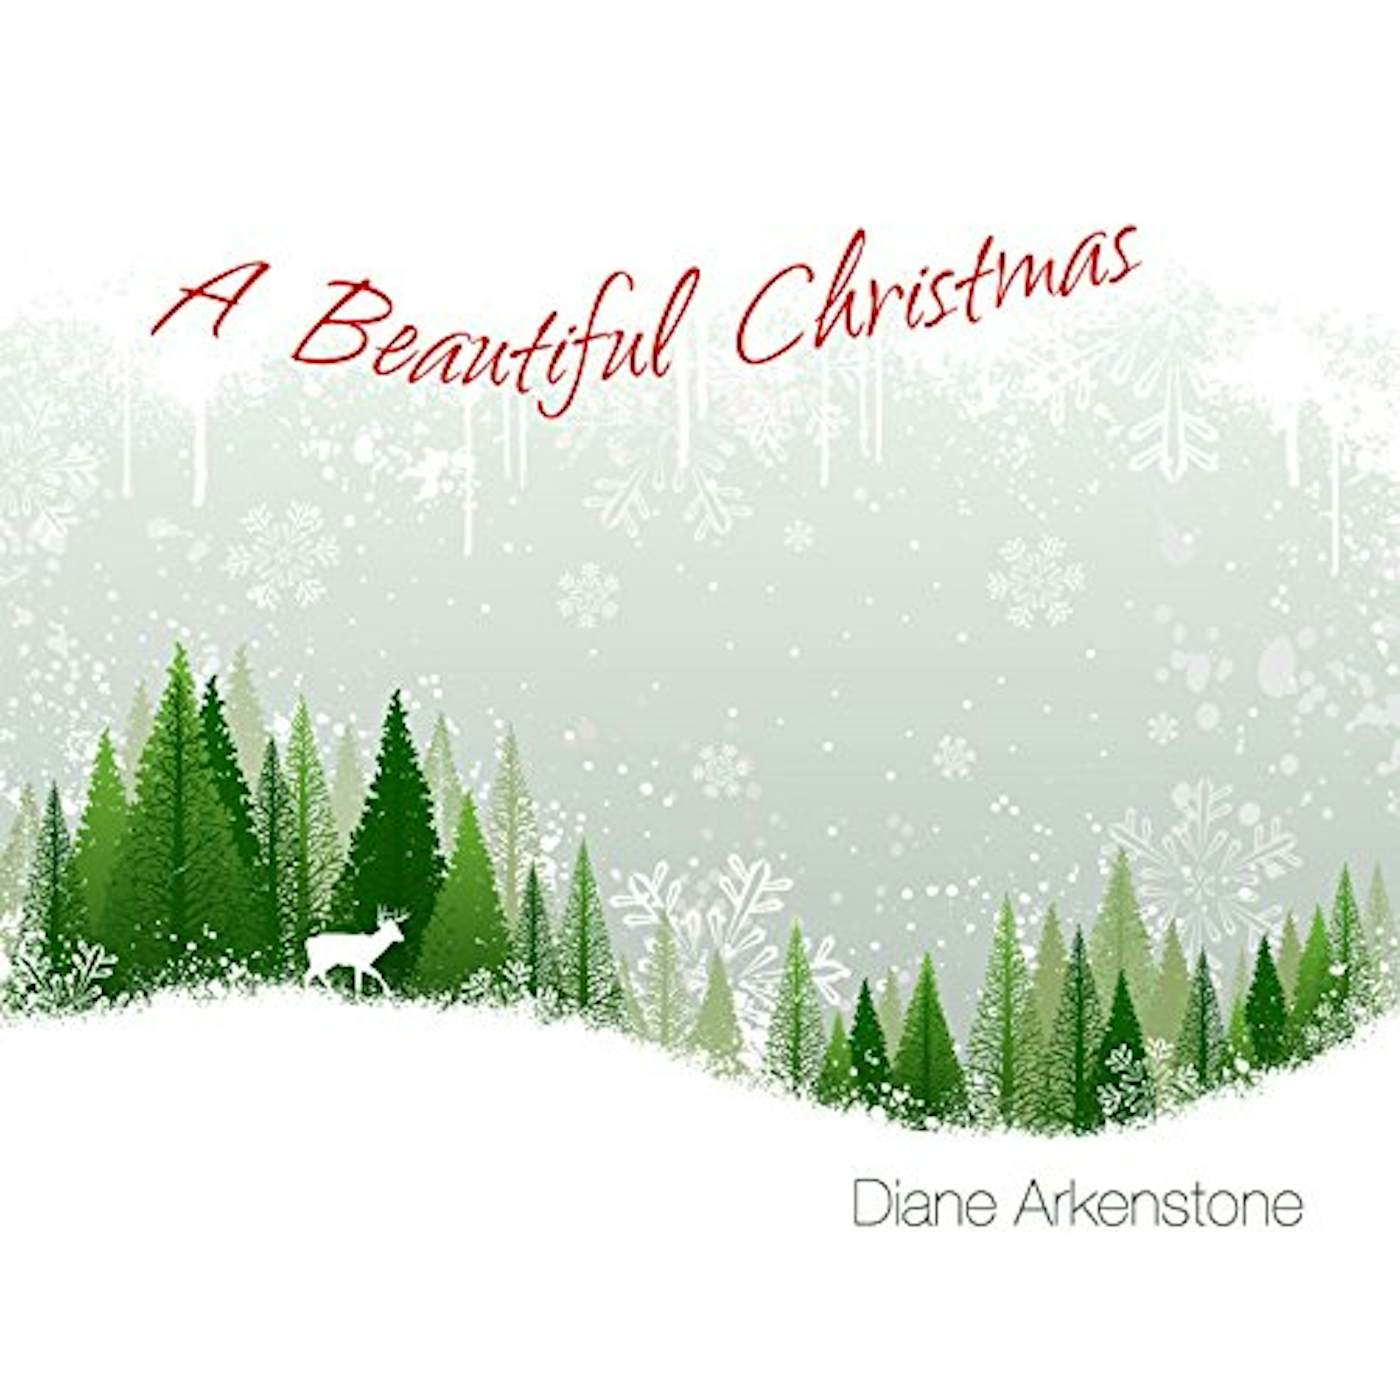 Diane Arkenstone BEAUTIFUL CHRISTMAS CD